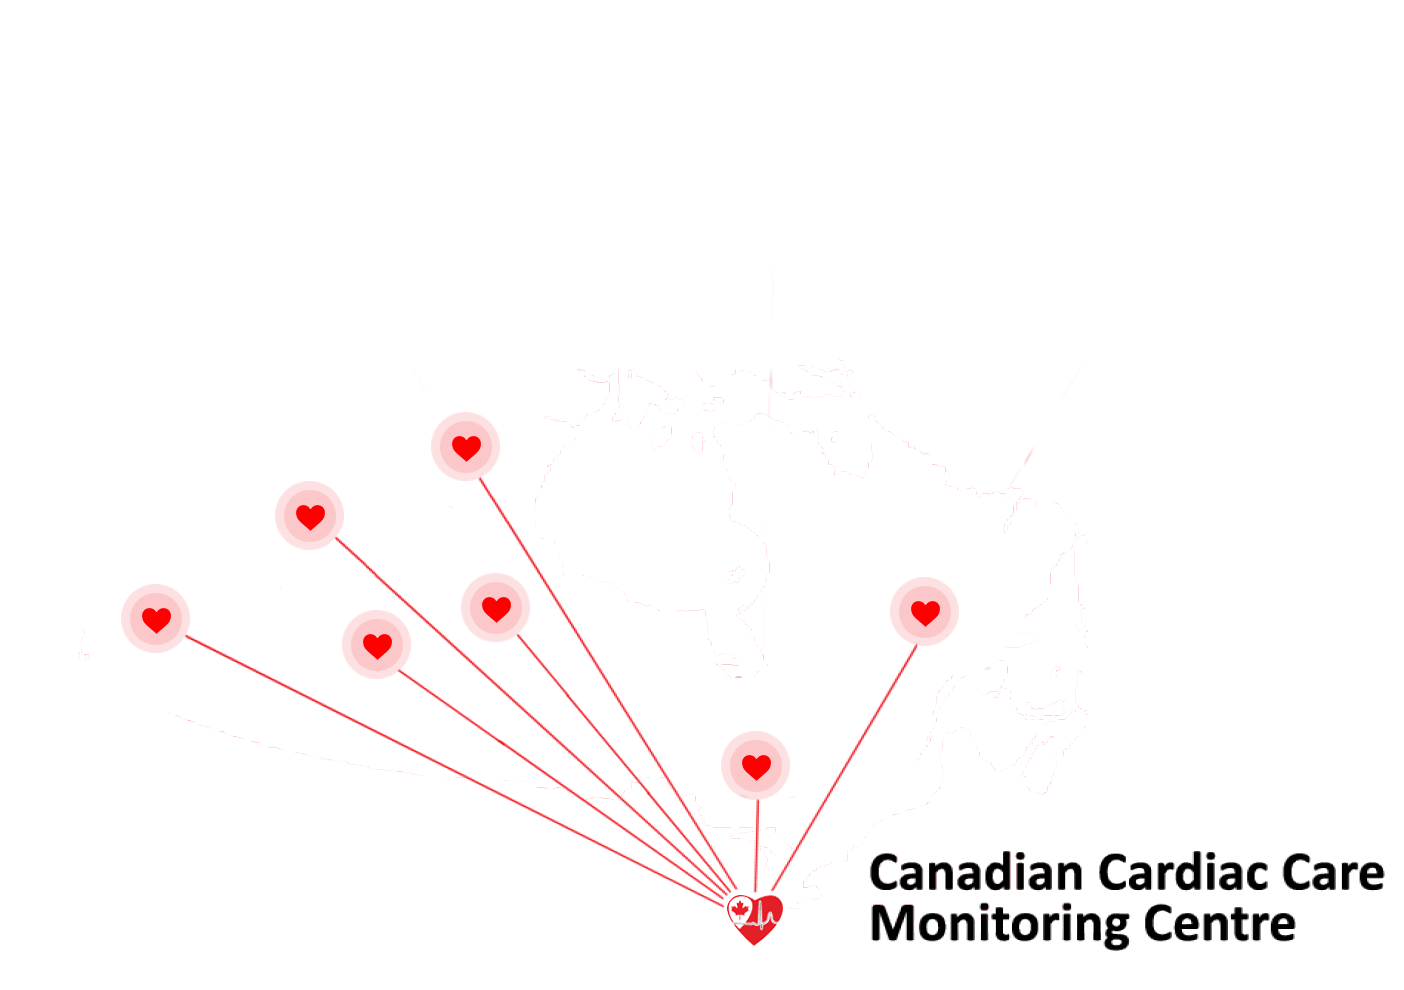 Canadian Cardiac Care Monitoring Centre (CCMC)